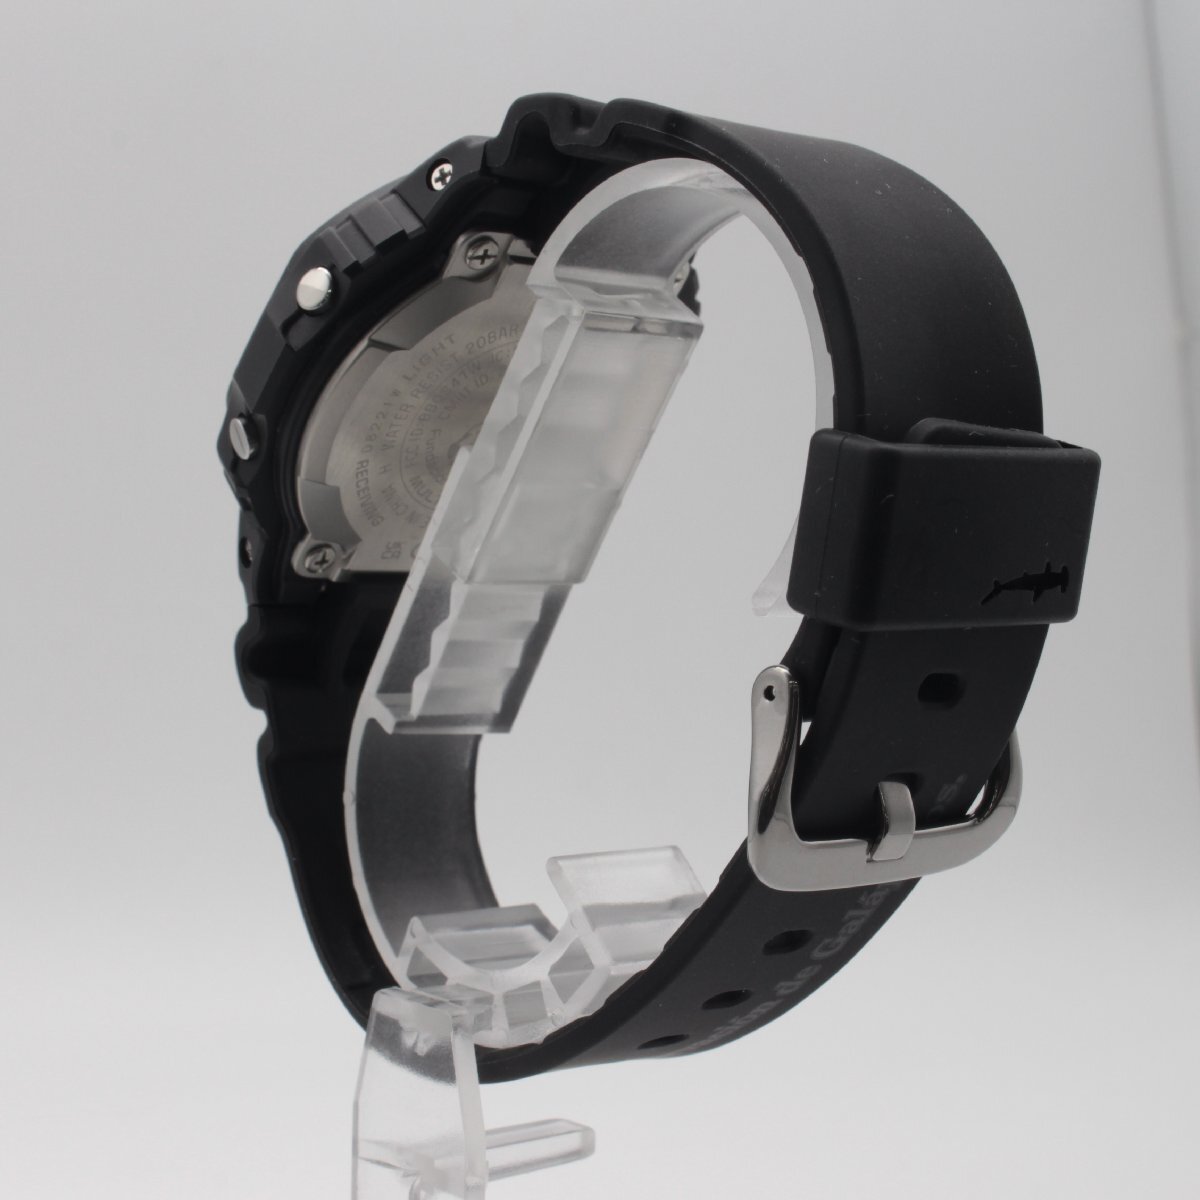 2702▲ CASIO 腕時計 G-SHOCK GW-B5600CD-1A2JR 20気圧防水 耐衝撃性 電波 ソーラー Bluetooth チャールズ・ダーウィン財団モデル【0311】の画像5